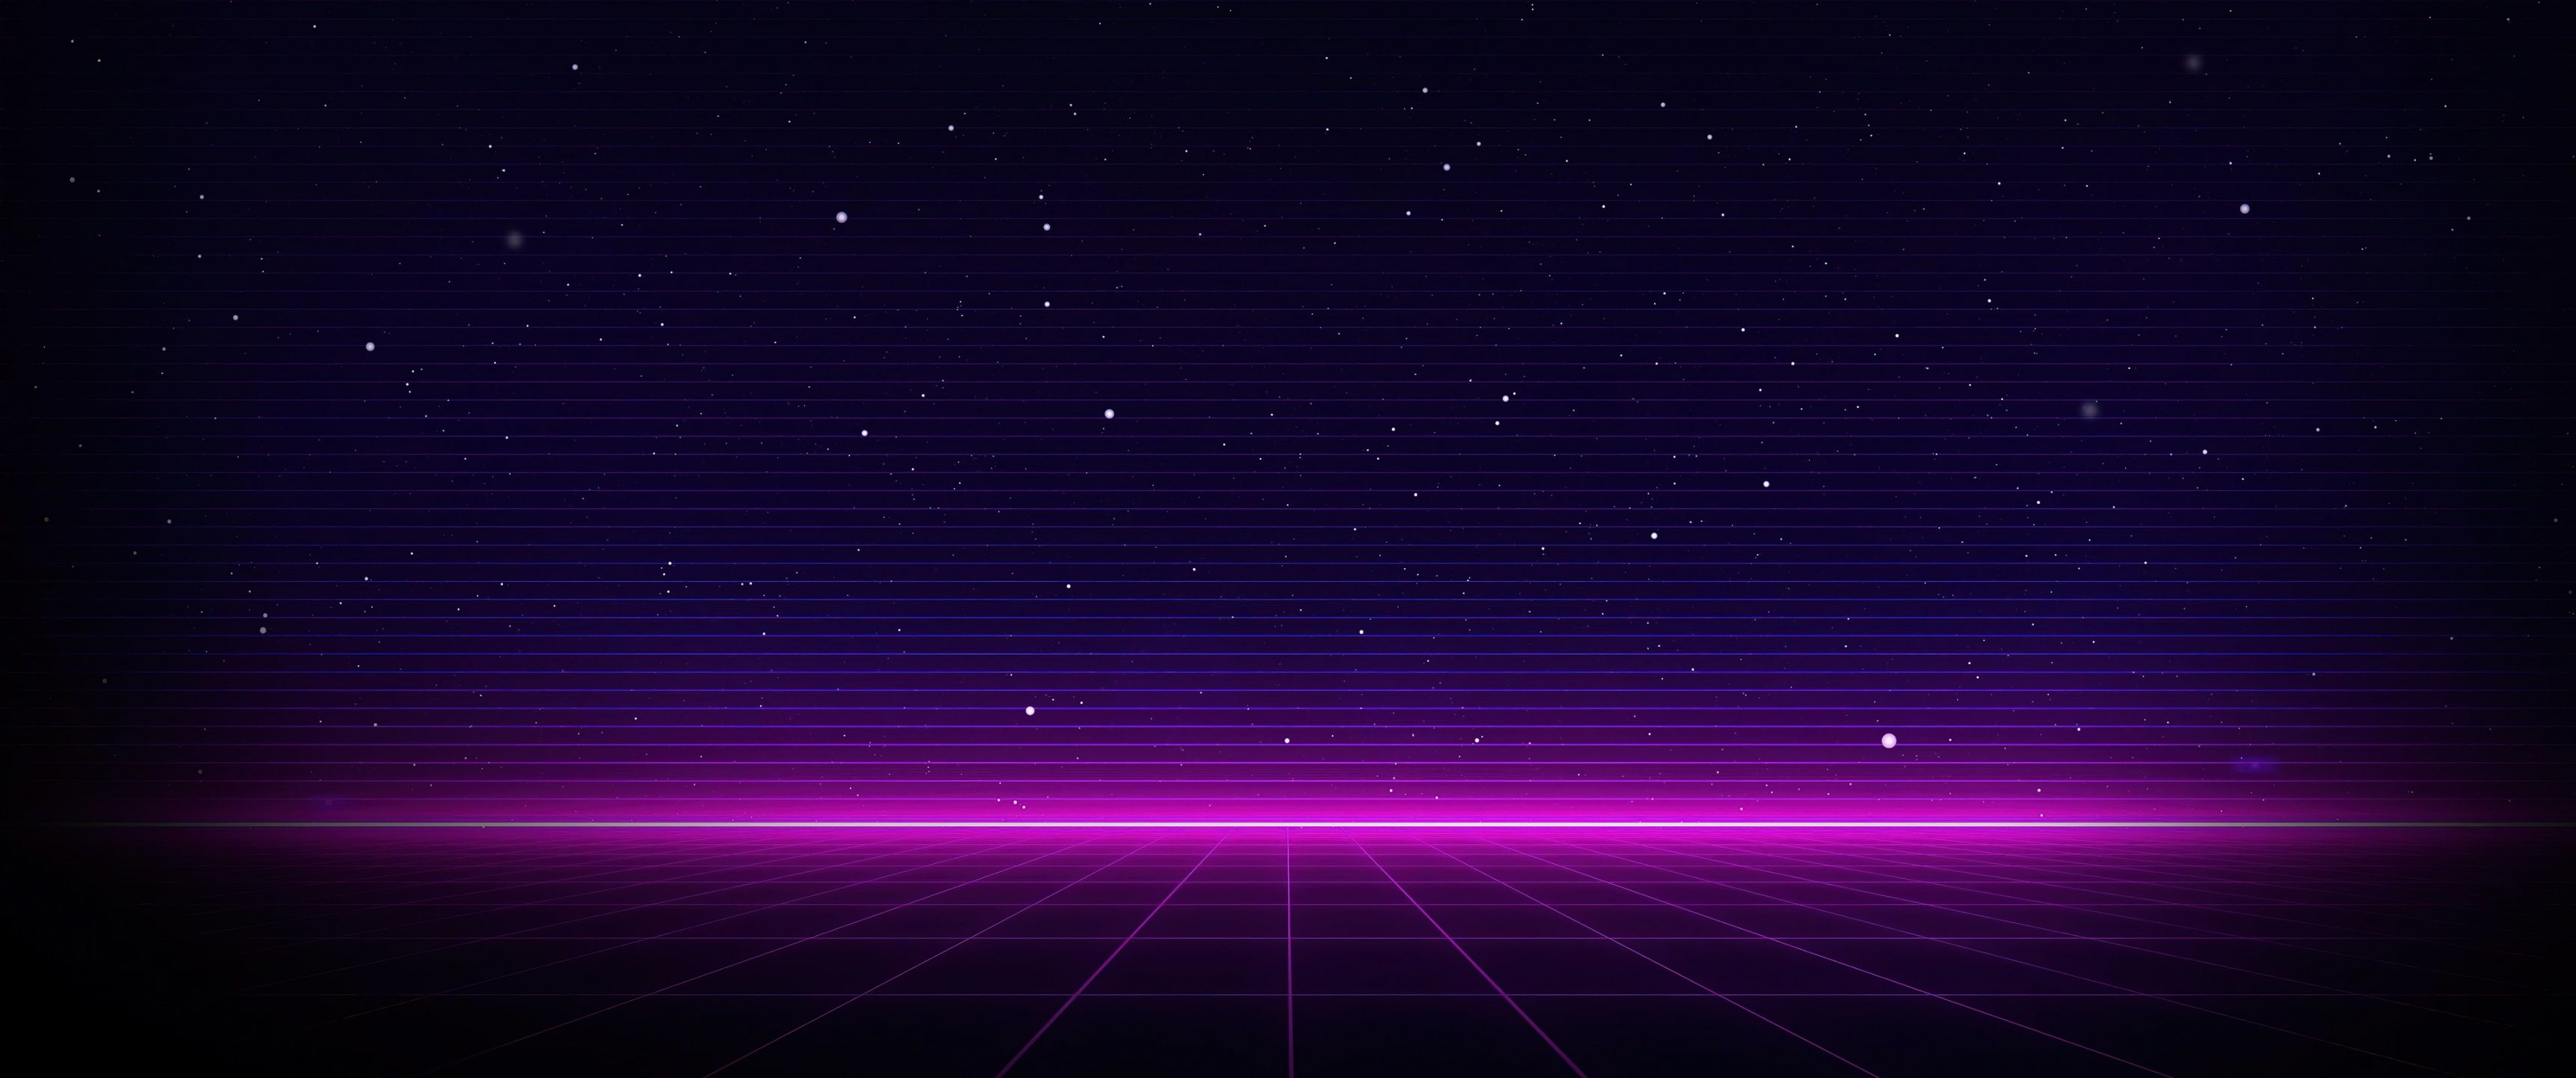 A retro 80s style background with neon lights - Dark purple, neon purple